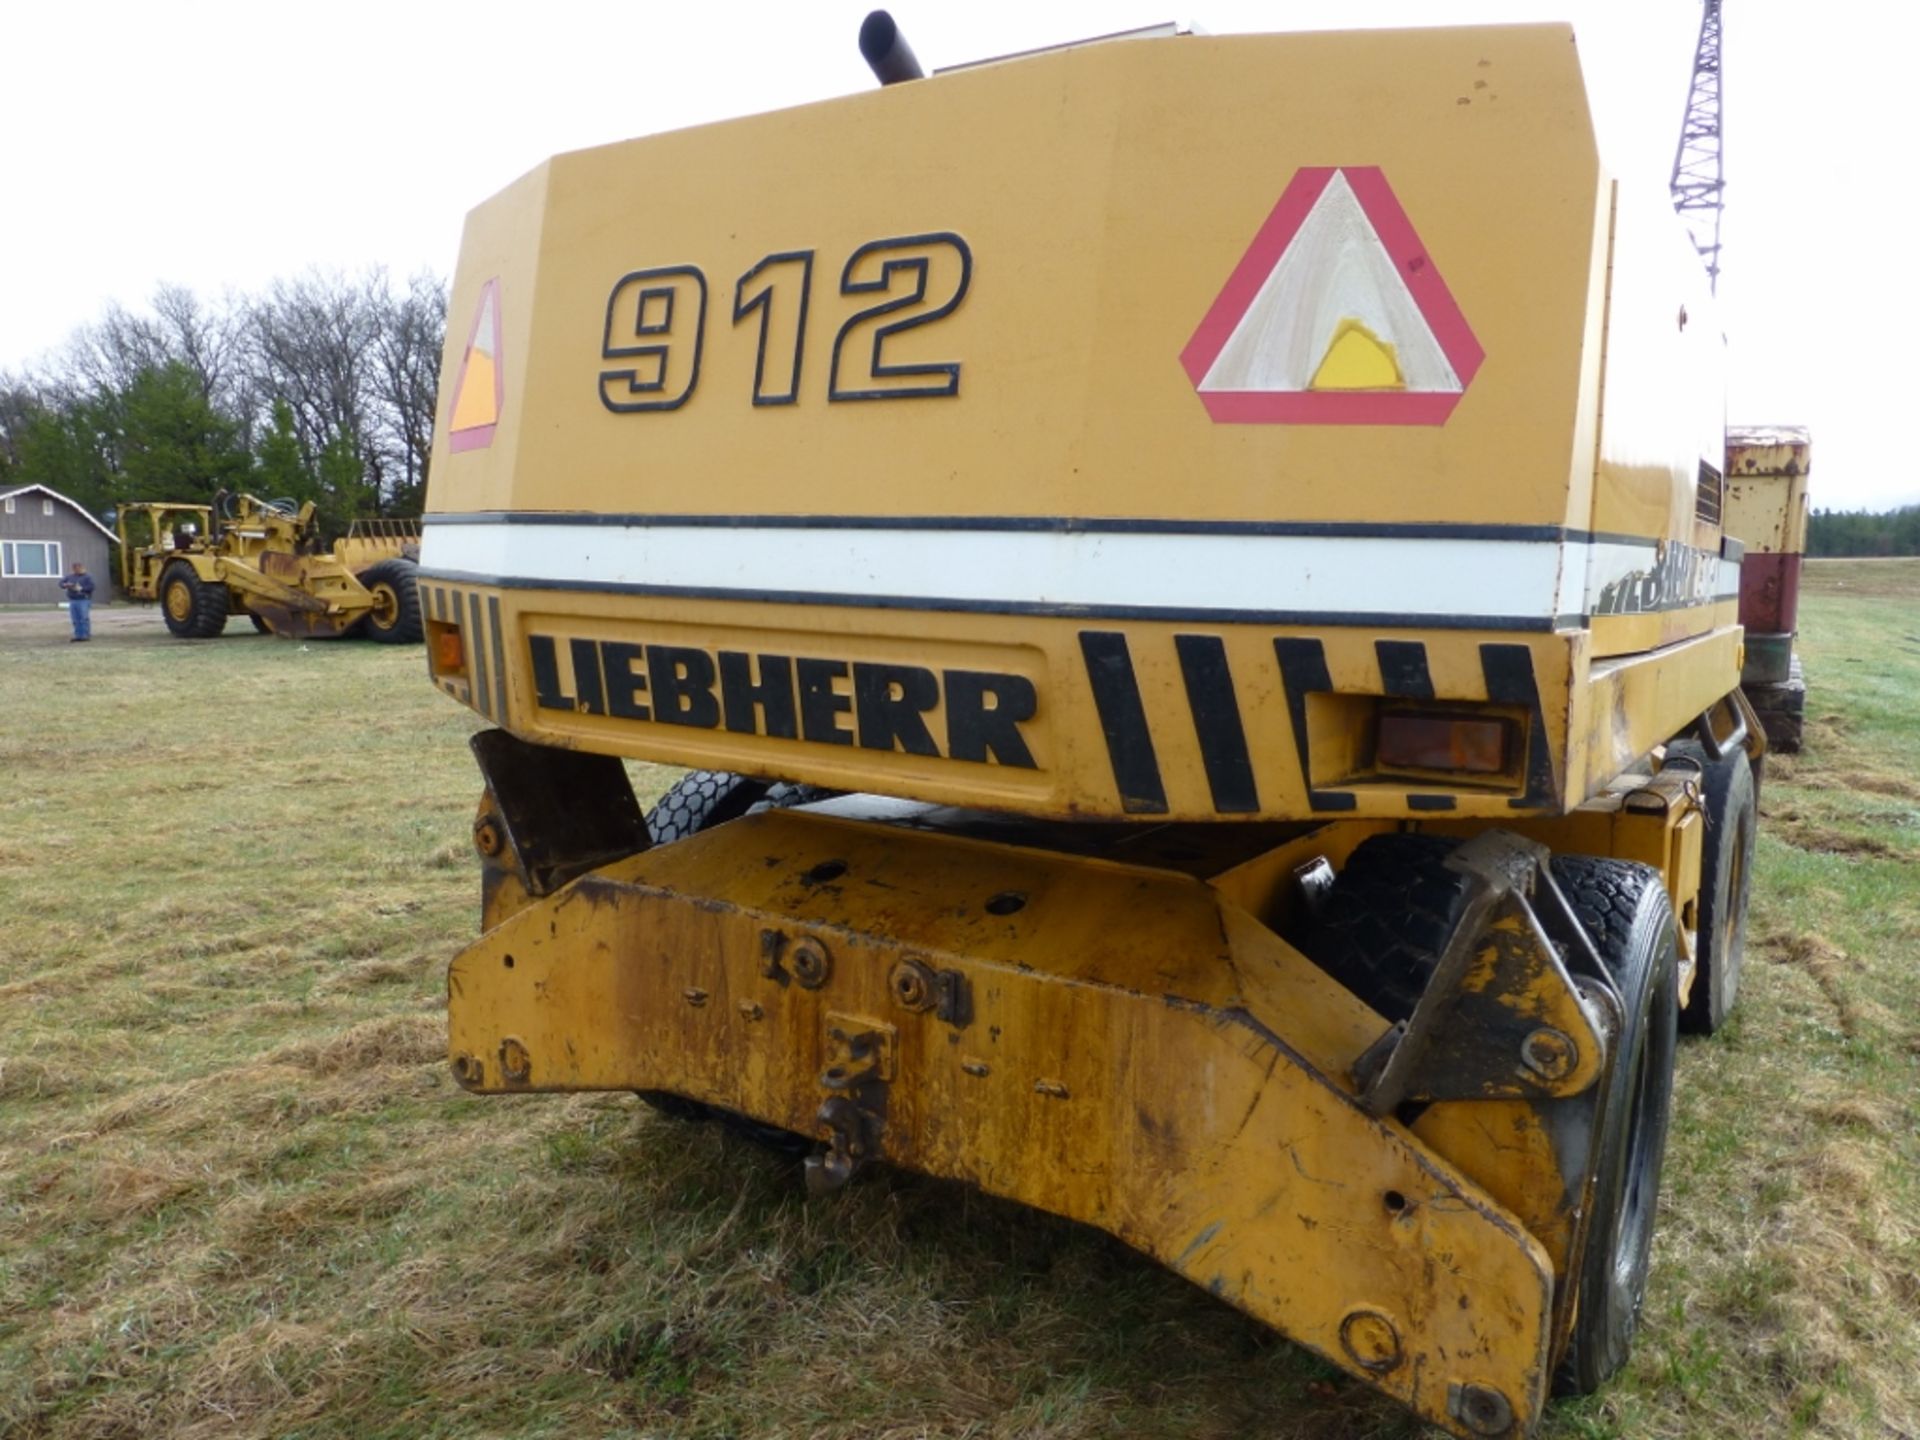 Liebherr 912 wheel excavator - Image 17 of 30